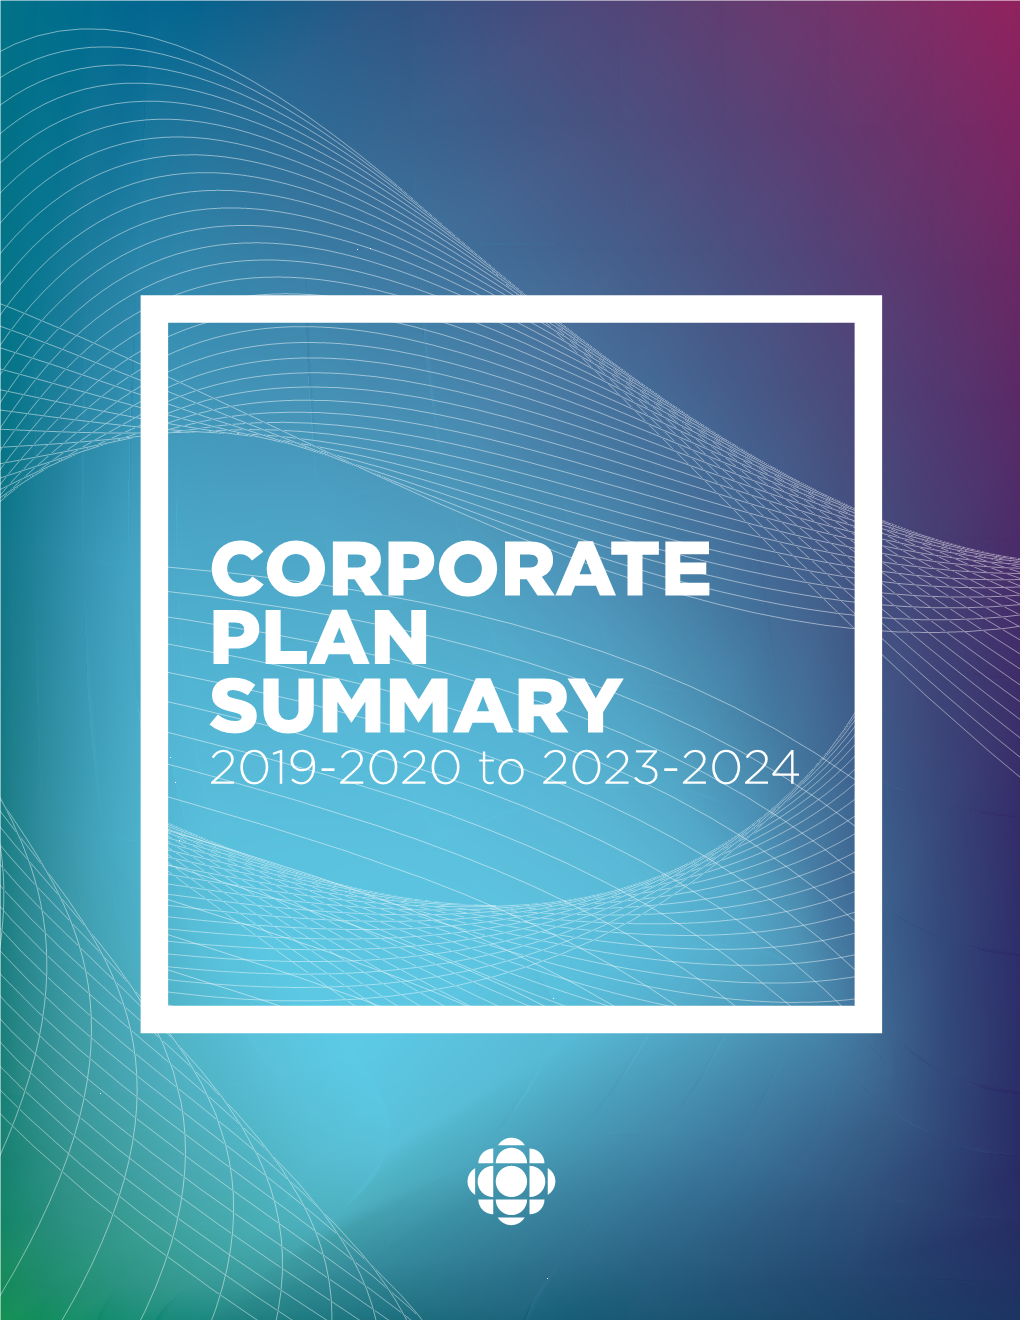 CORPORATE PLAN SUMMARY 2019-2020 to 2023-2024